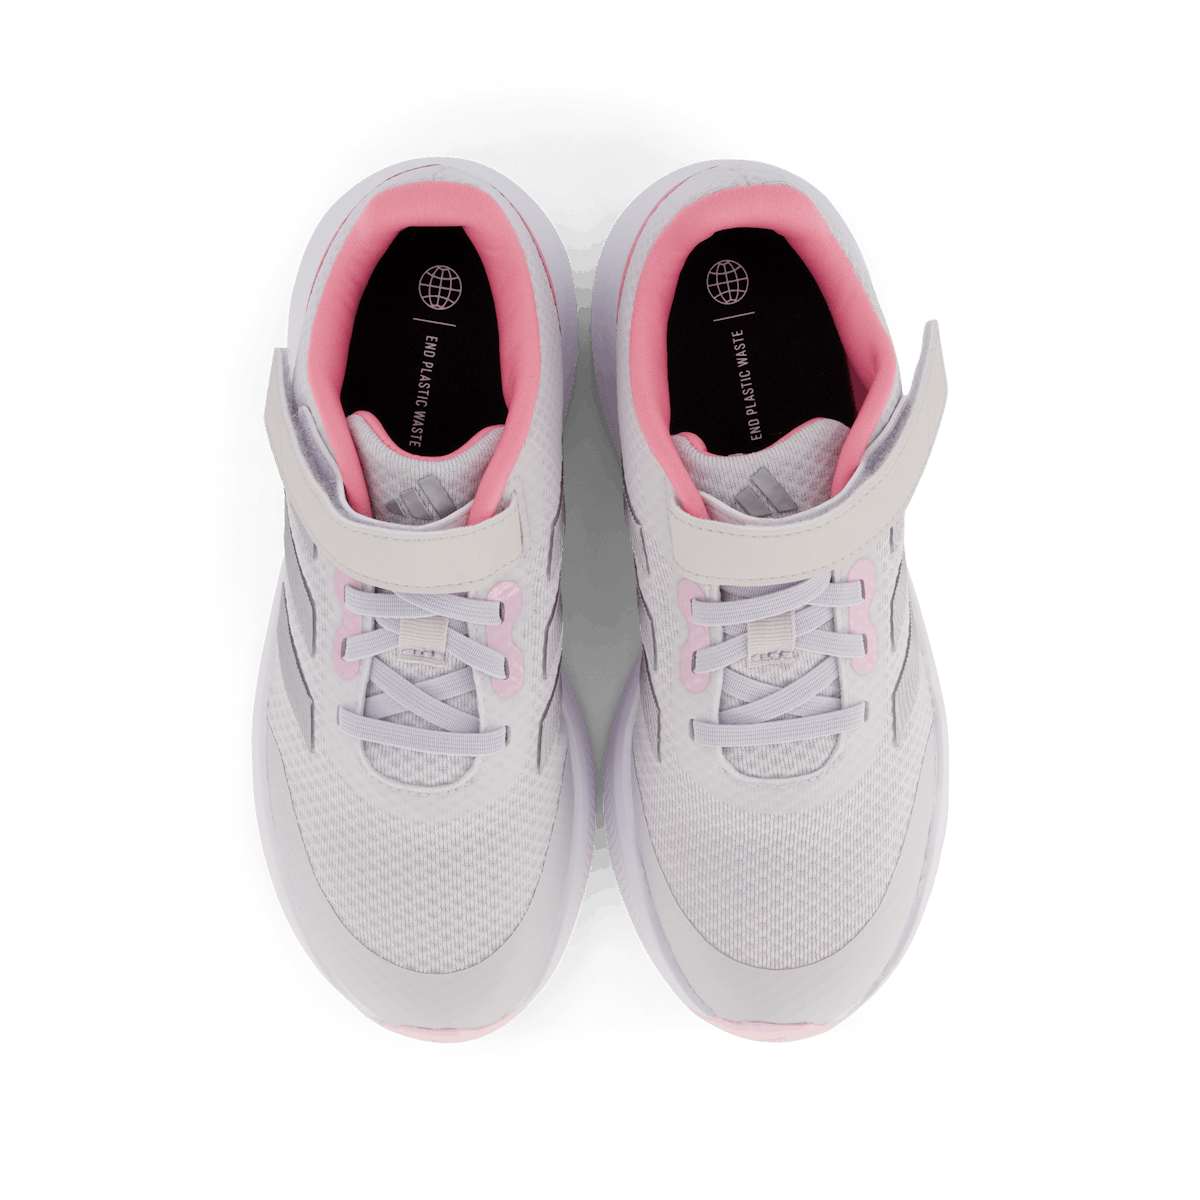 RunFalcon 3.0 Elastic Lace Top Strap Shoes Dshgry / Silvmt / Blipnk